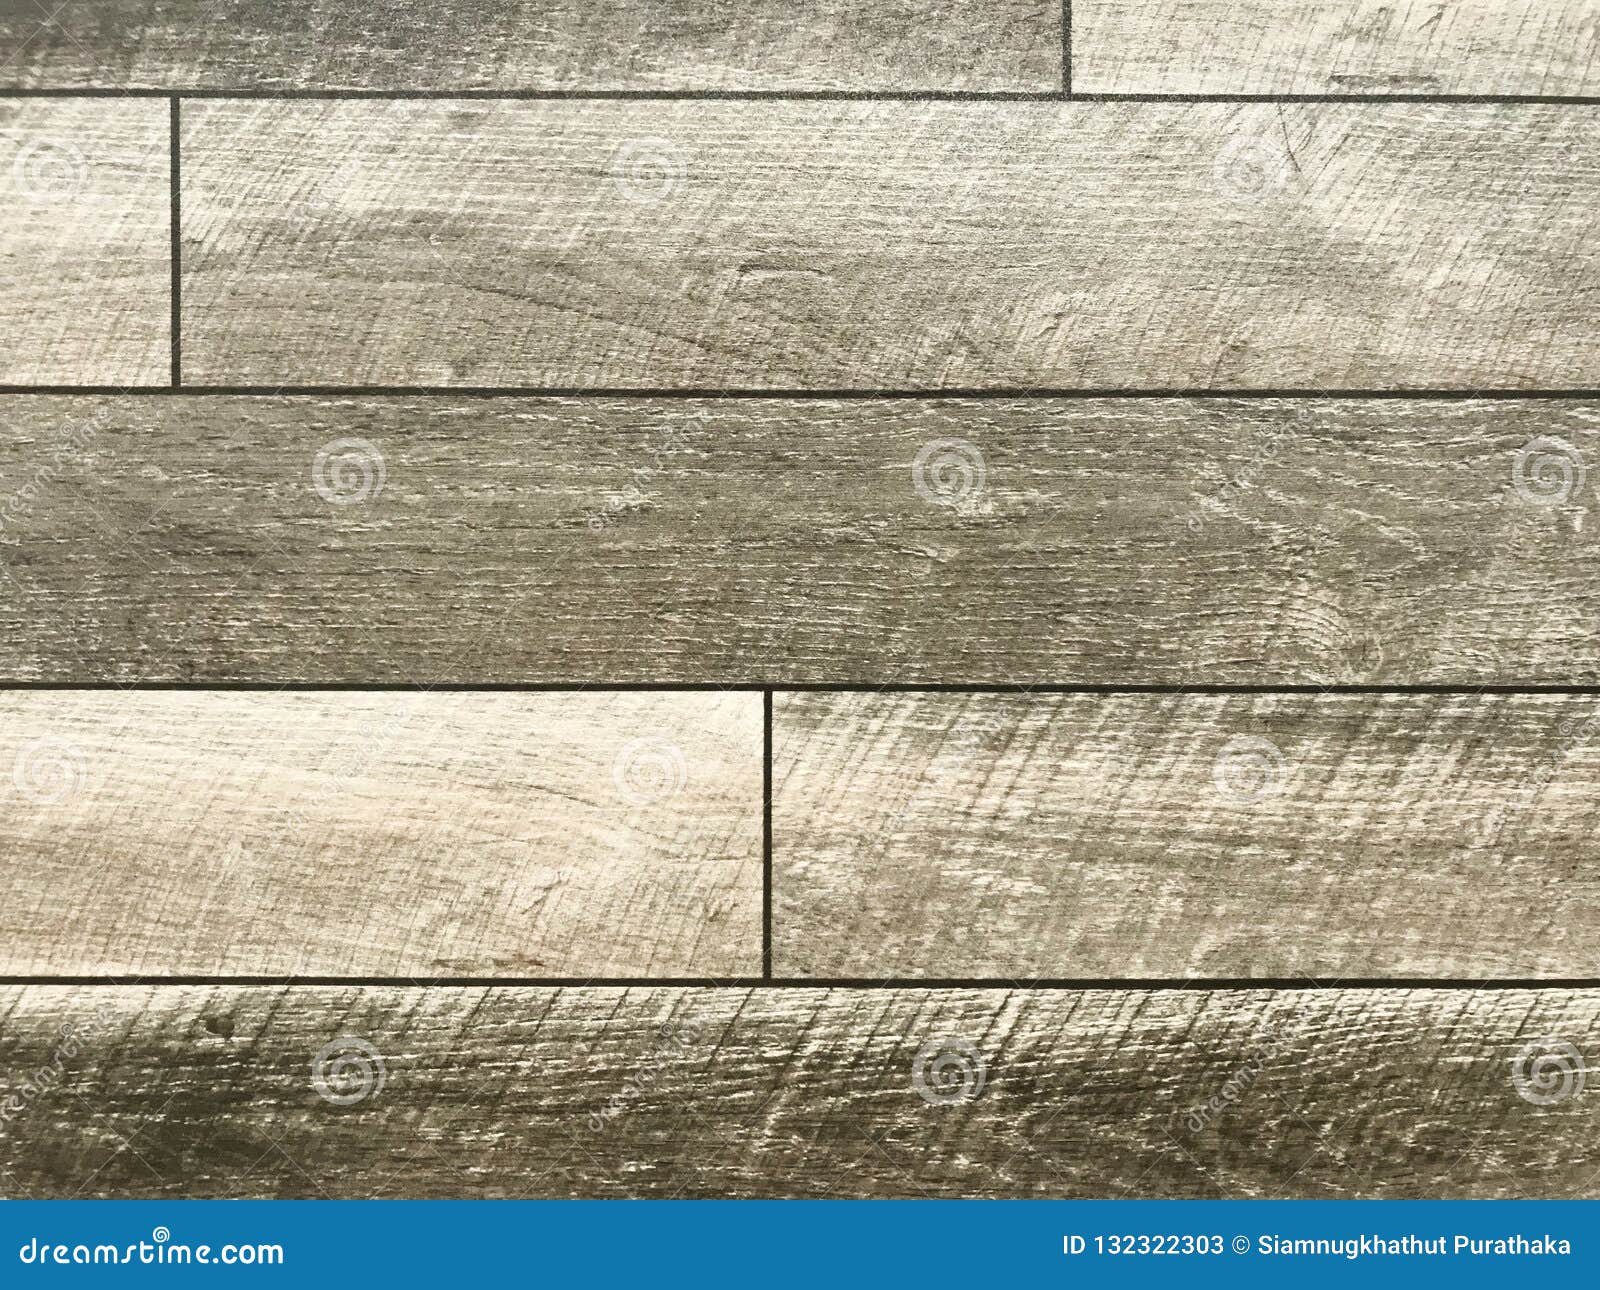 Wood Texture On Stone Concrete Flooring Stock Image Image Of